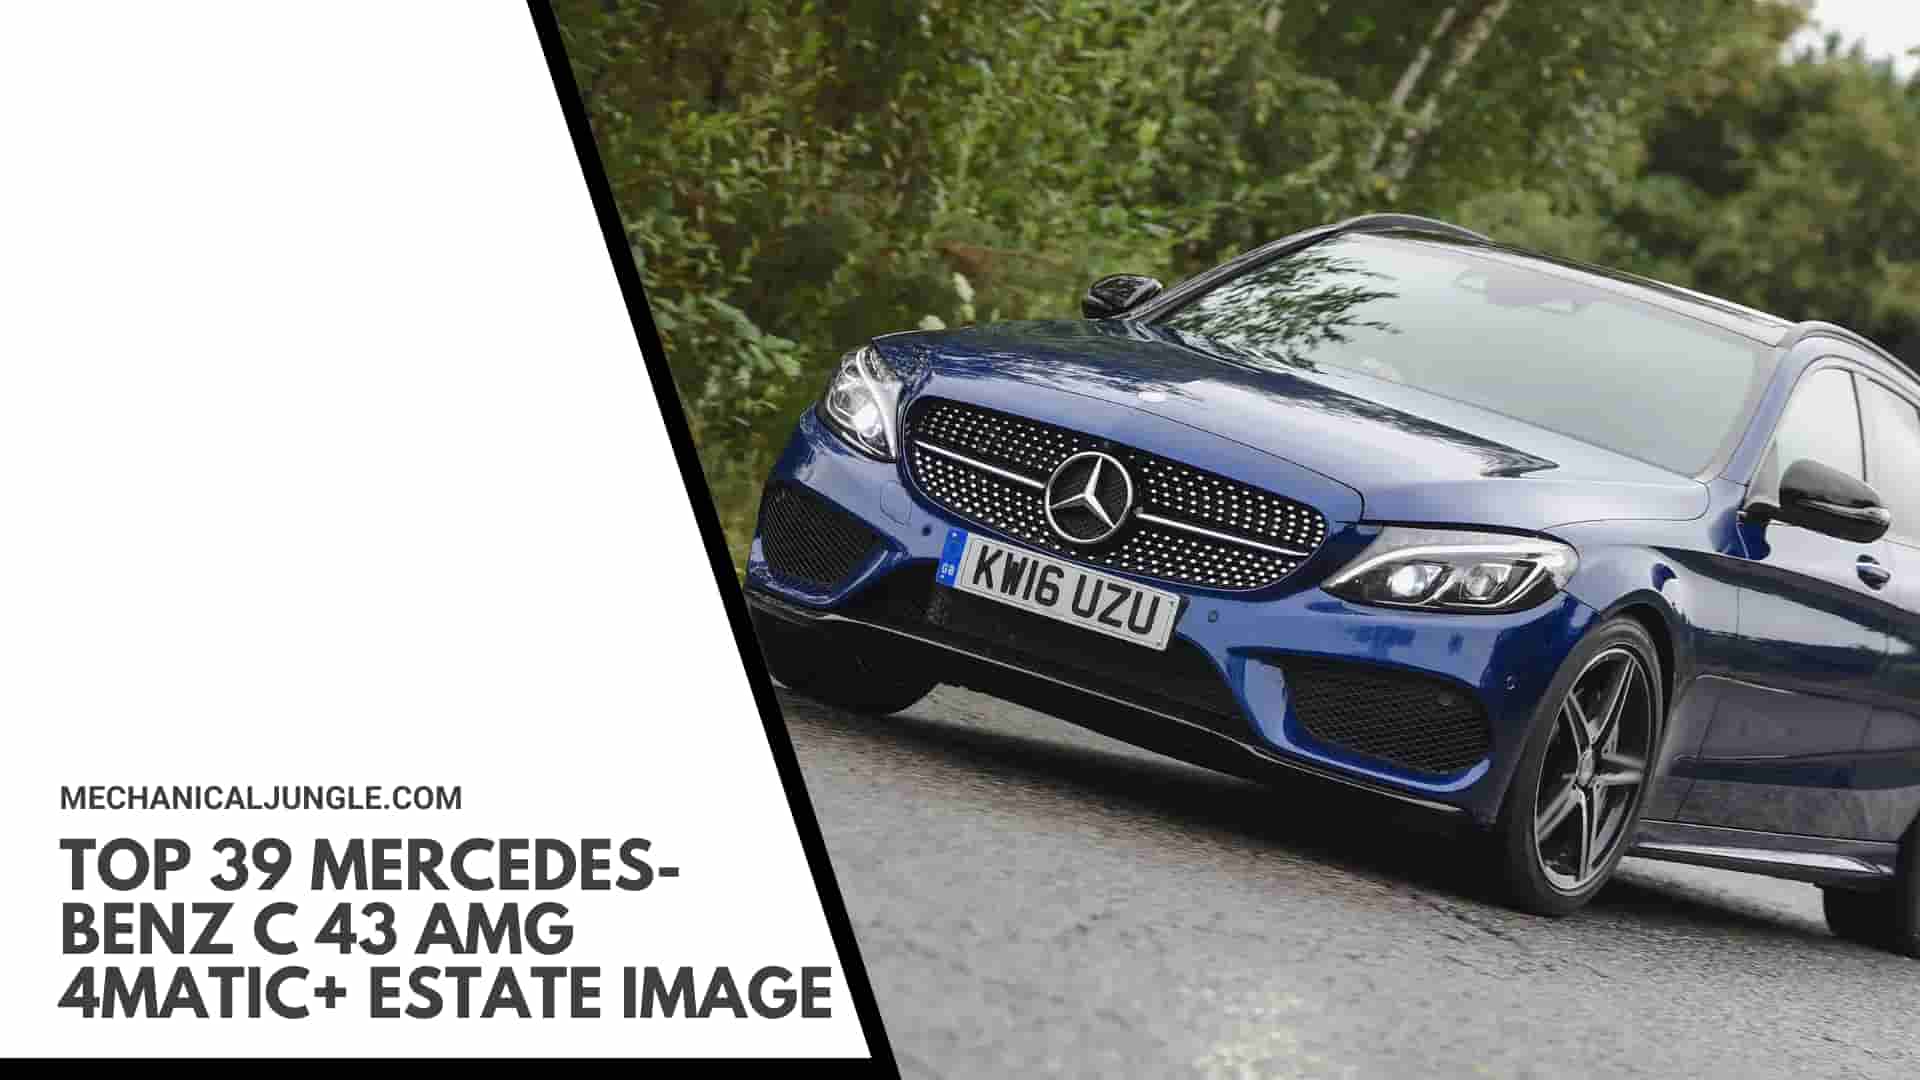 Top 39 Mercedes-Benz C 43 AMG 4MATIC+ Estate Image